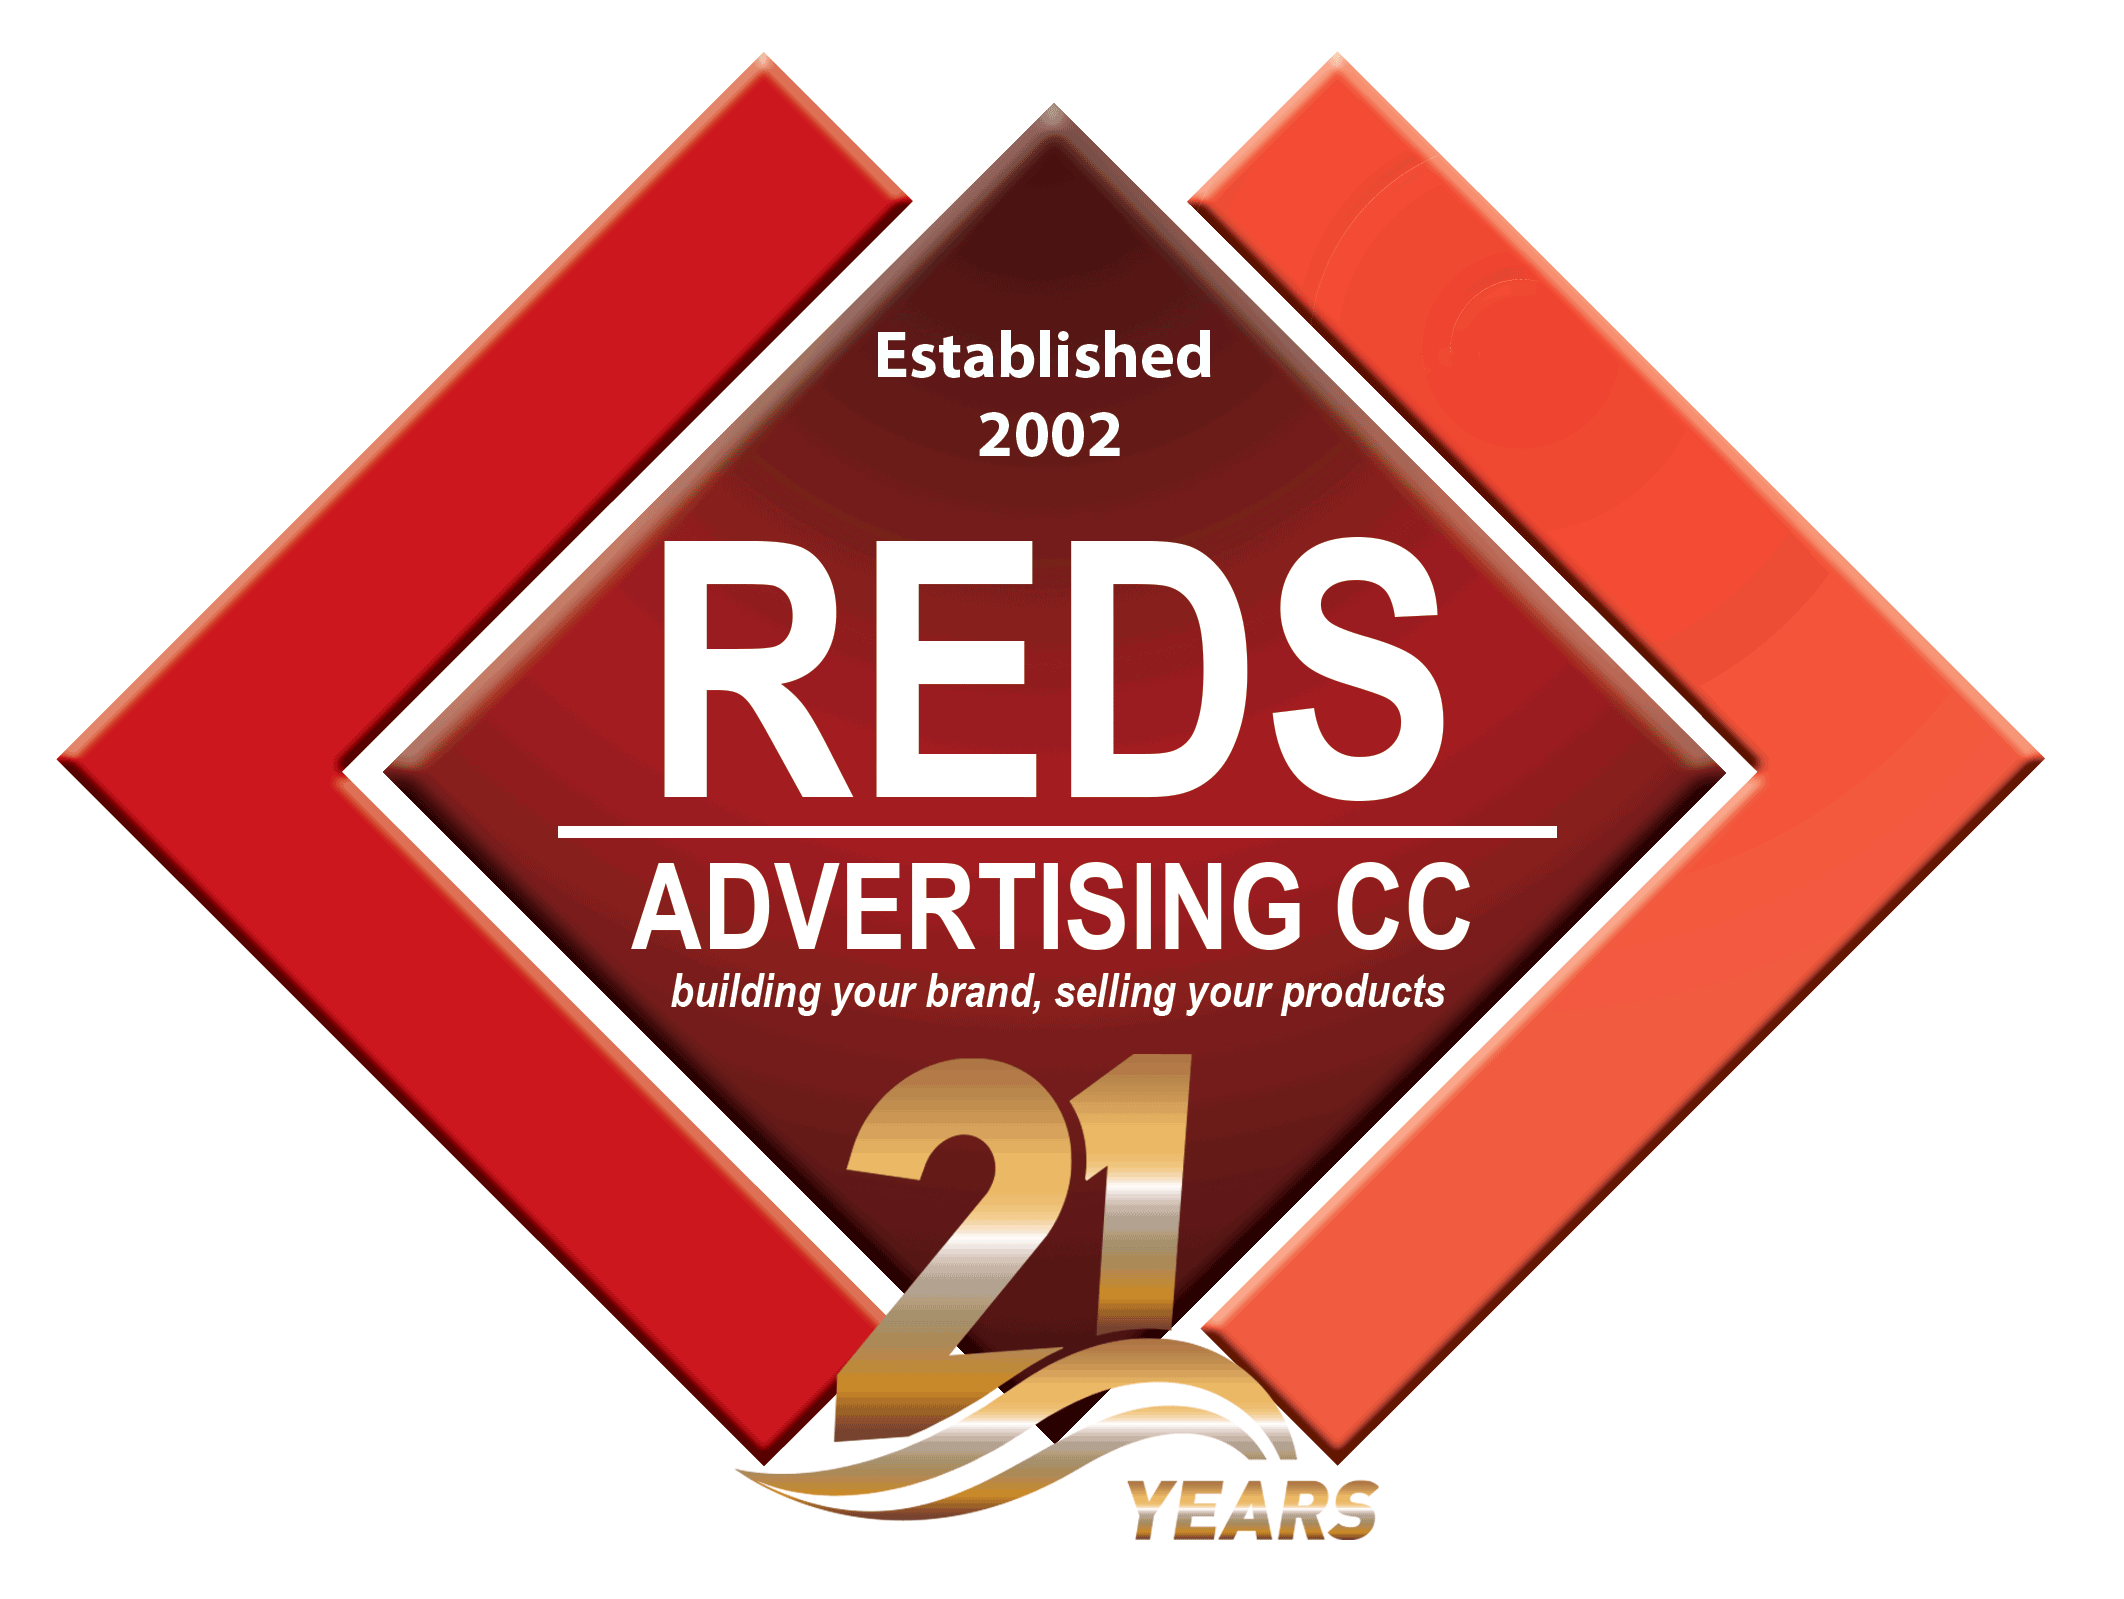 Reds Advertising - 21 Years